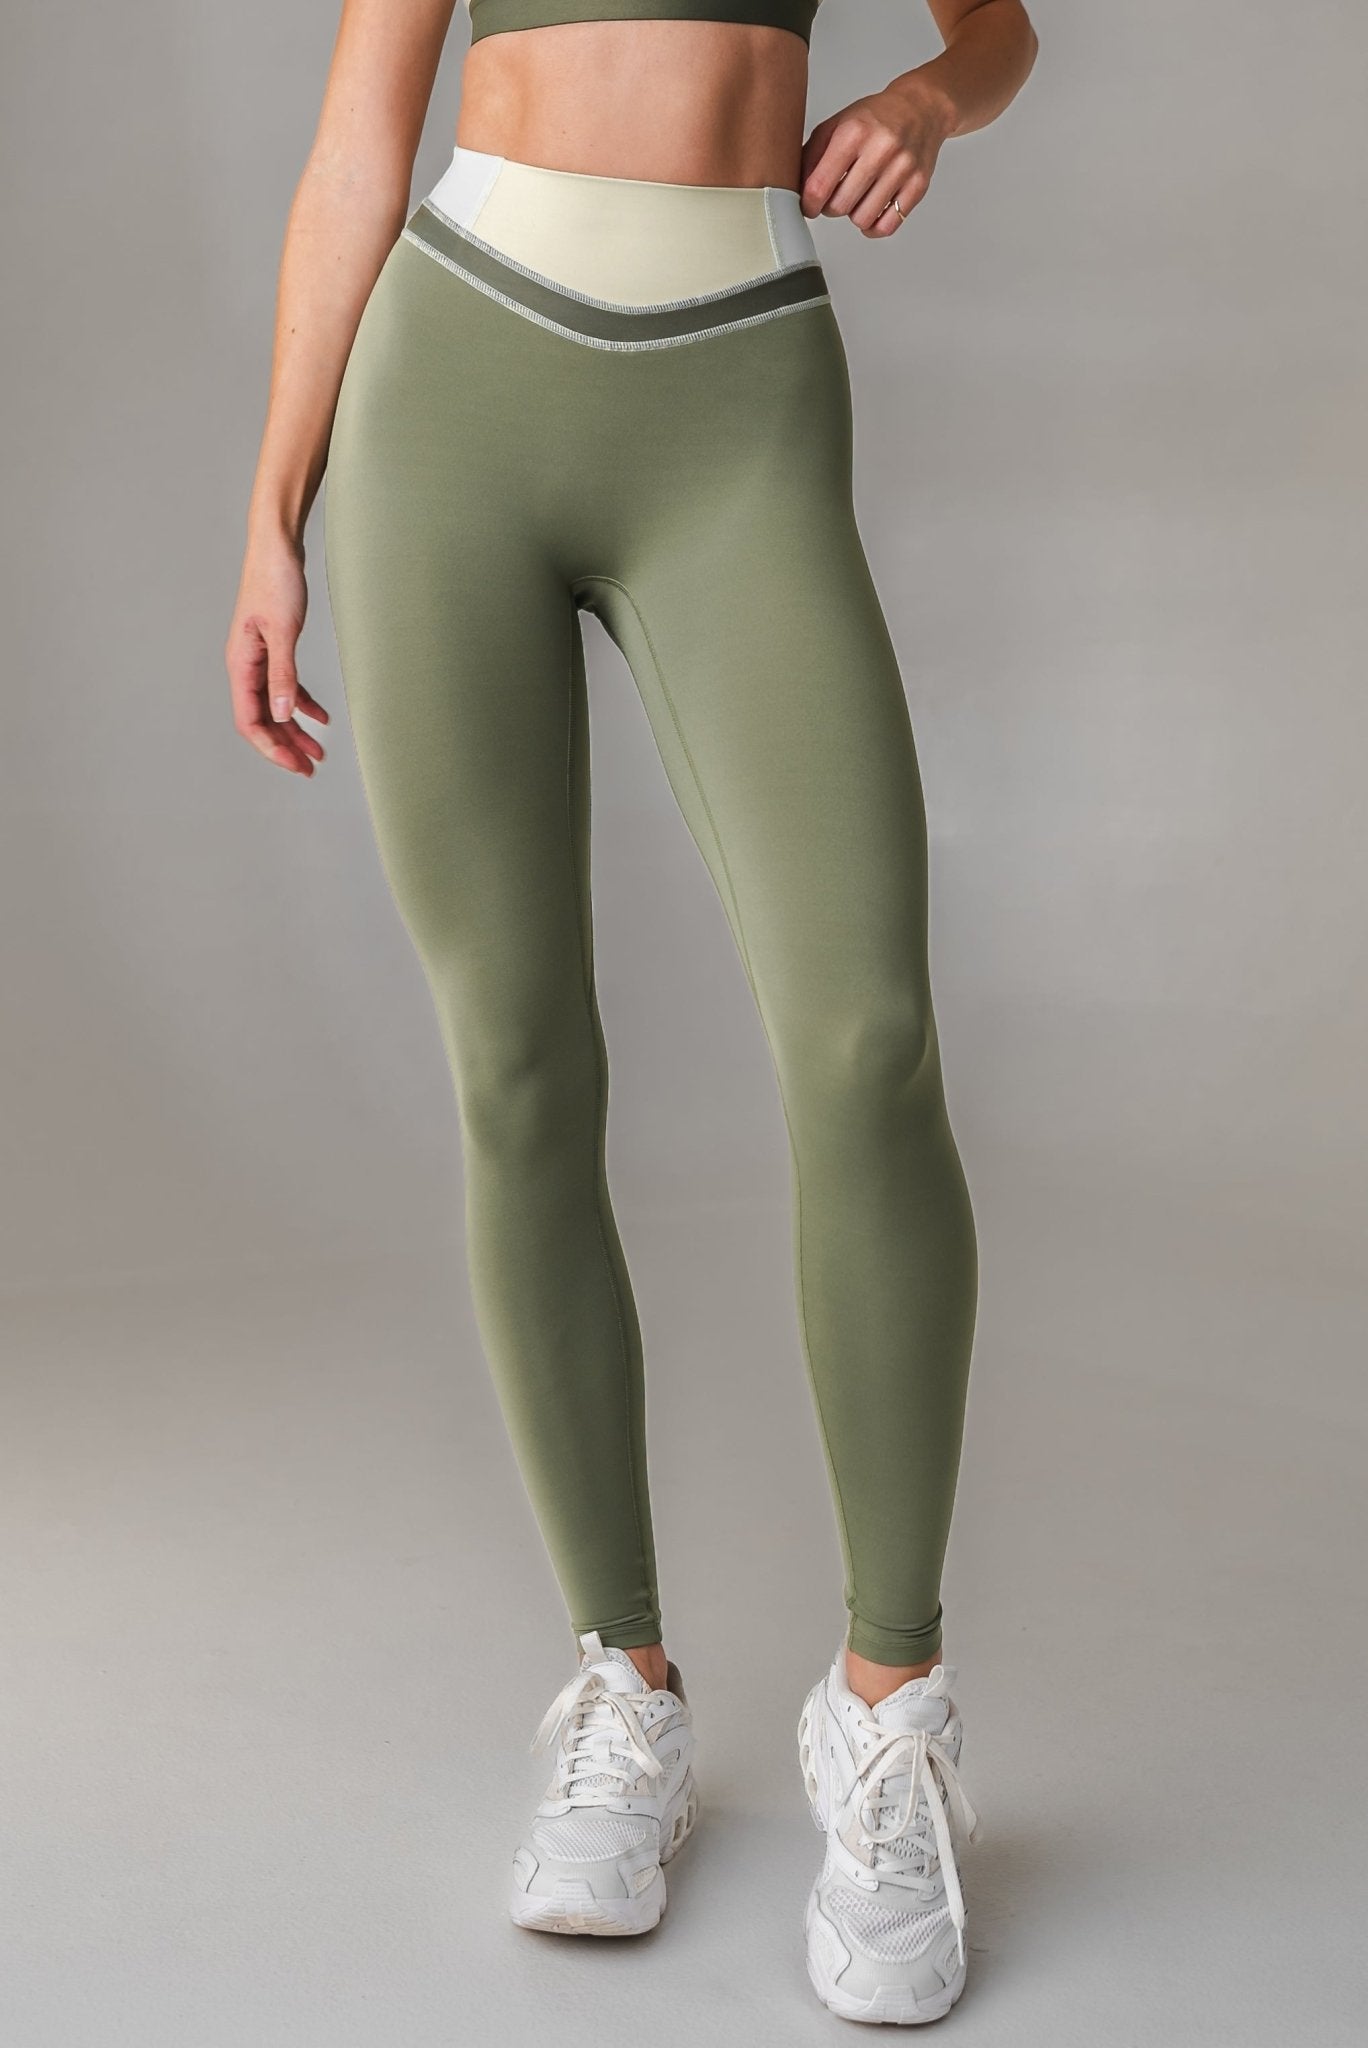  PVCS Womens Capri Pants Training Pants with Pockets Gym Biker  Shorts Seamless Tight Flare Yoga Capri Pants Crop Sport Pants Army Green :  Sports & Outdoors